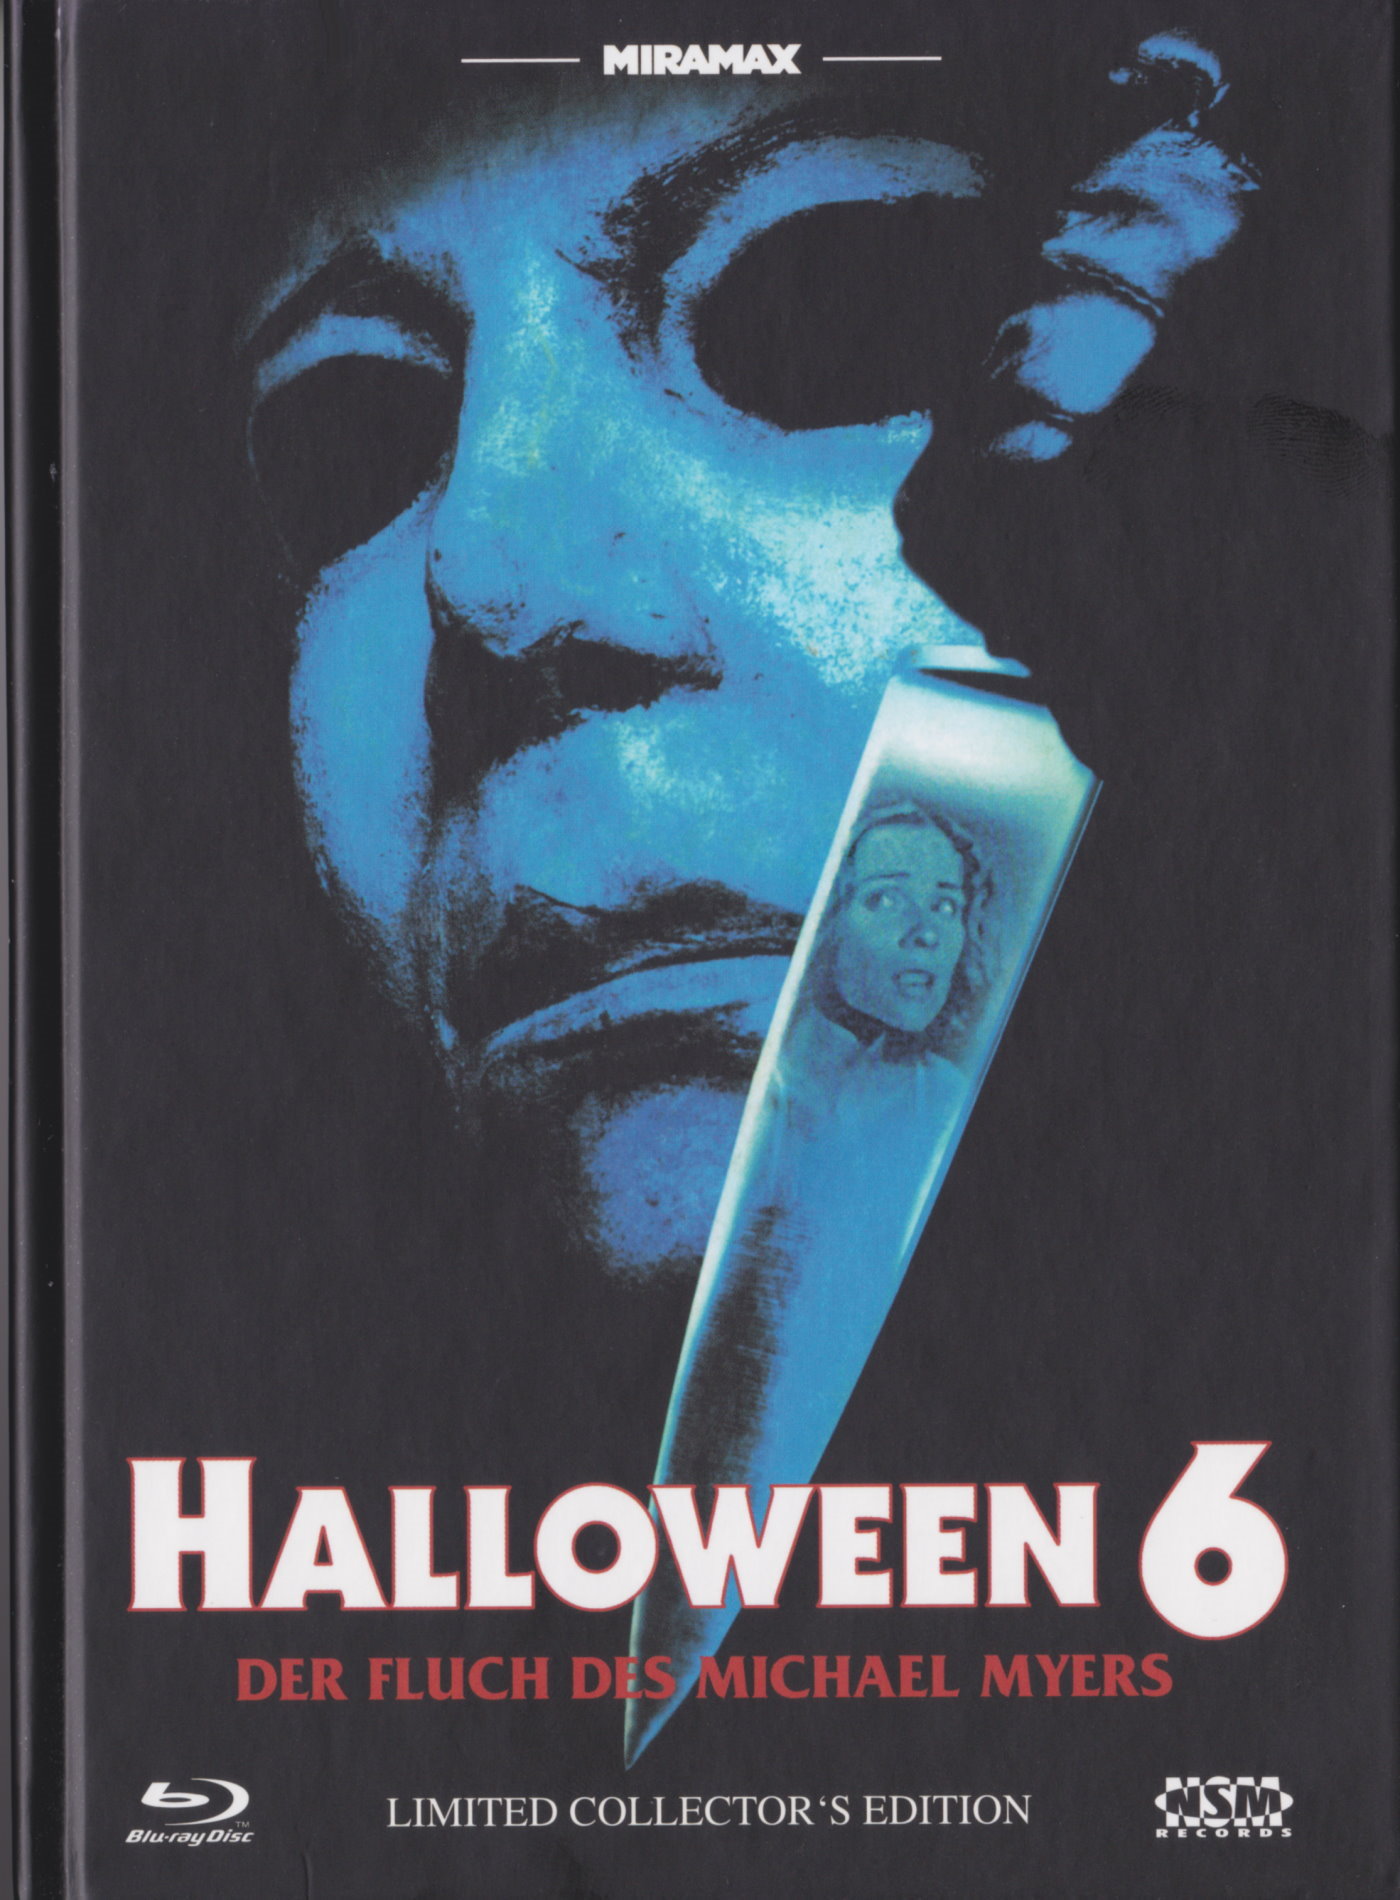 Cover - Halloween 6 - Der Fluch des Michael Myers.jpg